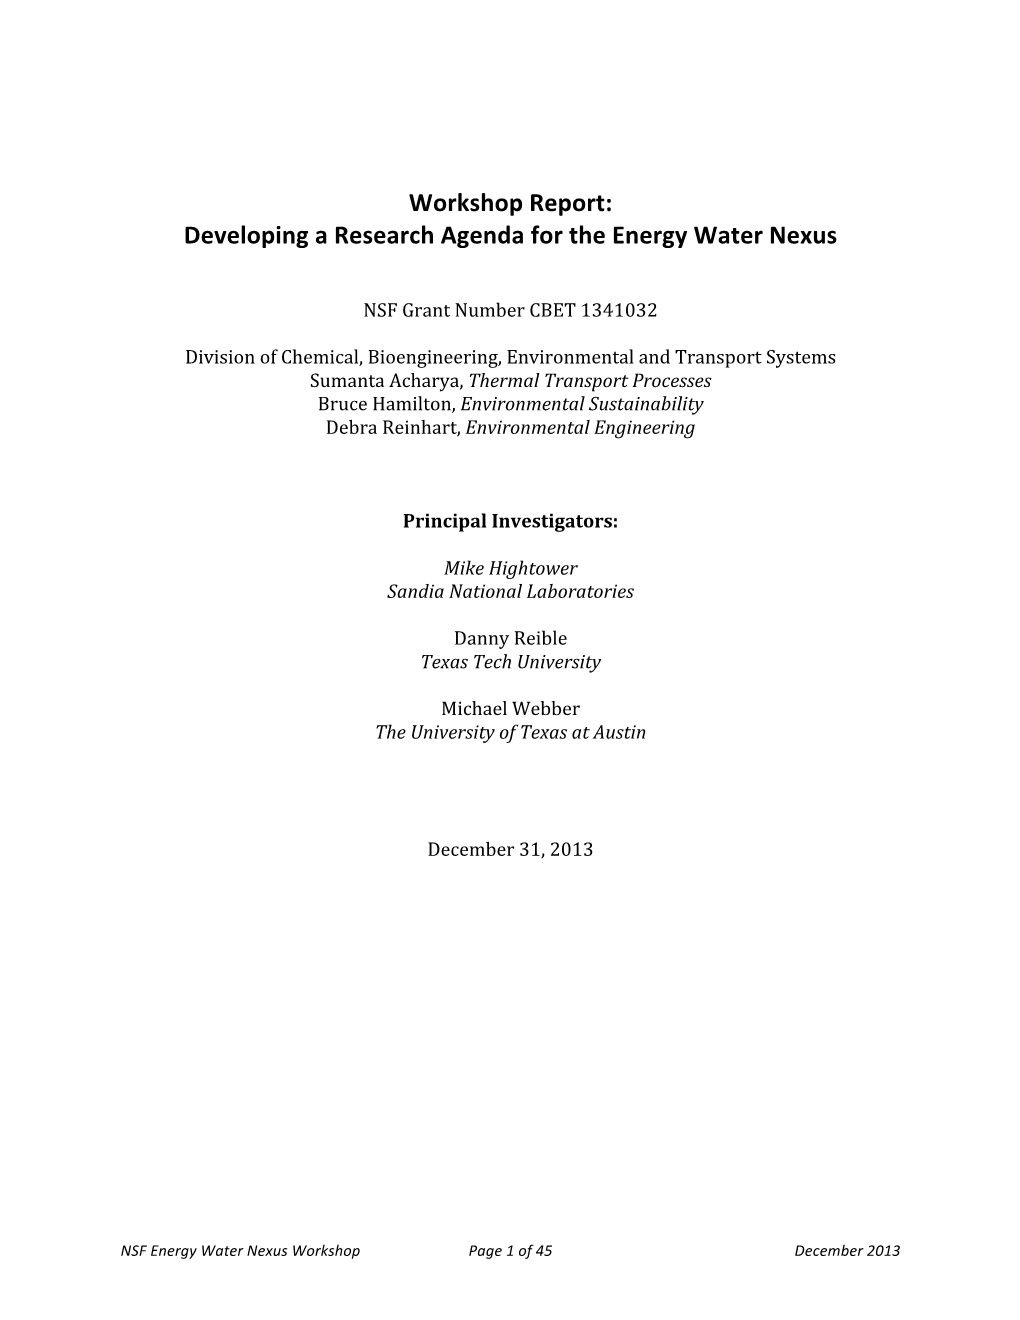 NSF EWN Workshop Report DRAFT 31 Dec 2013